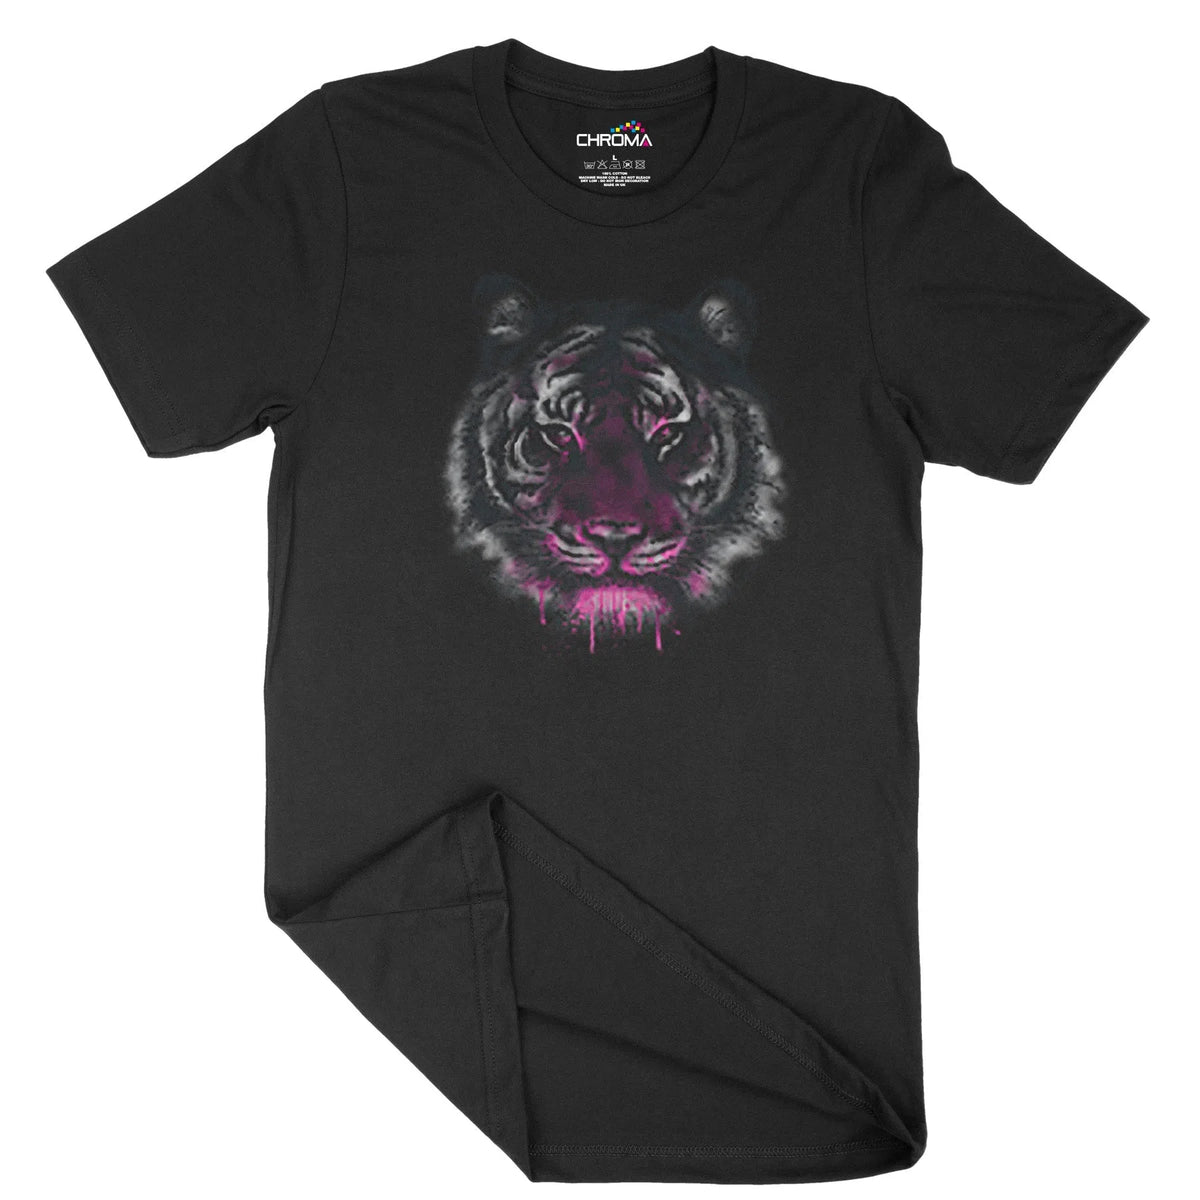 Neon Tiger Unisex Adult T-Shirt | Quality Slogan Clothing Chroma Clothing